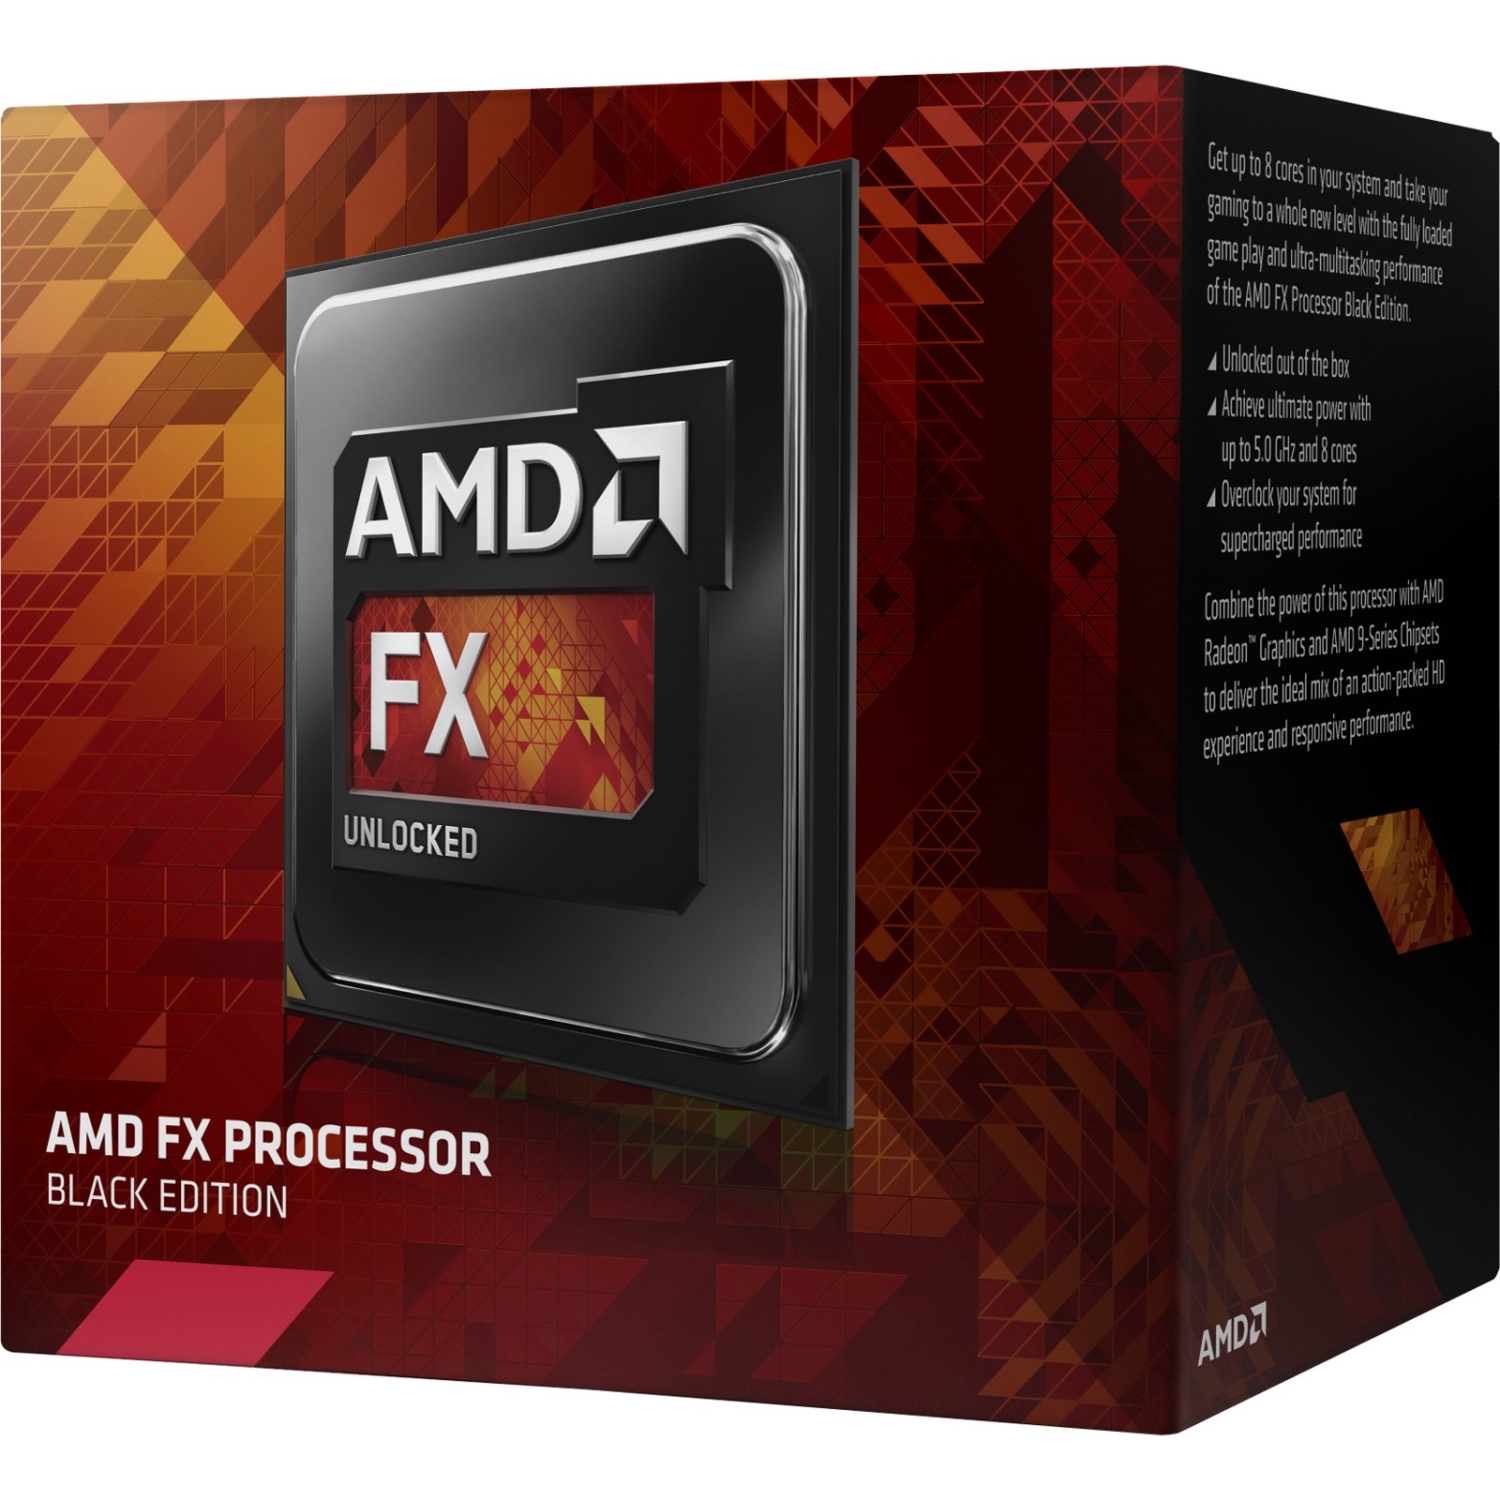 Amd Fd4300wmhkbox Quad-Core Fx-4300 3.8 Ghz 64-Bit Processor Black Edition - image 2 of 2